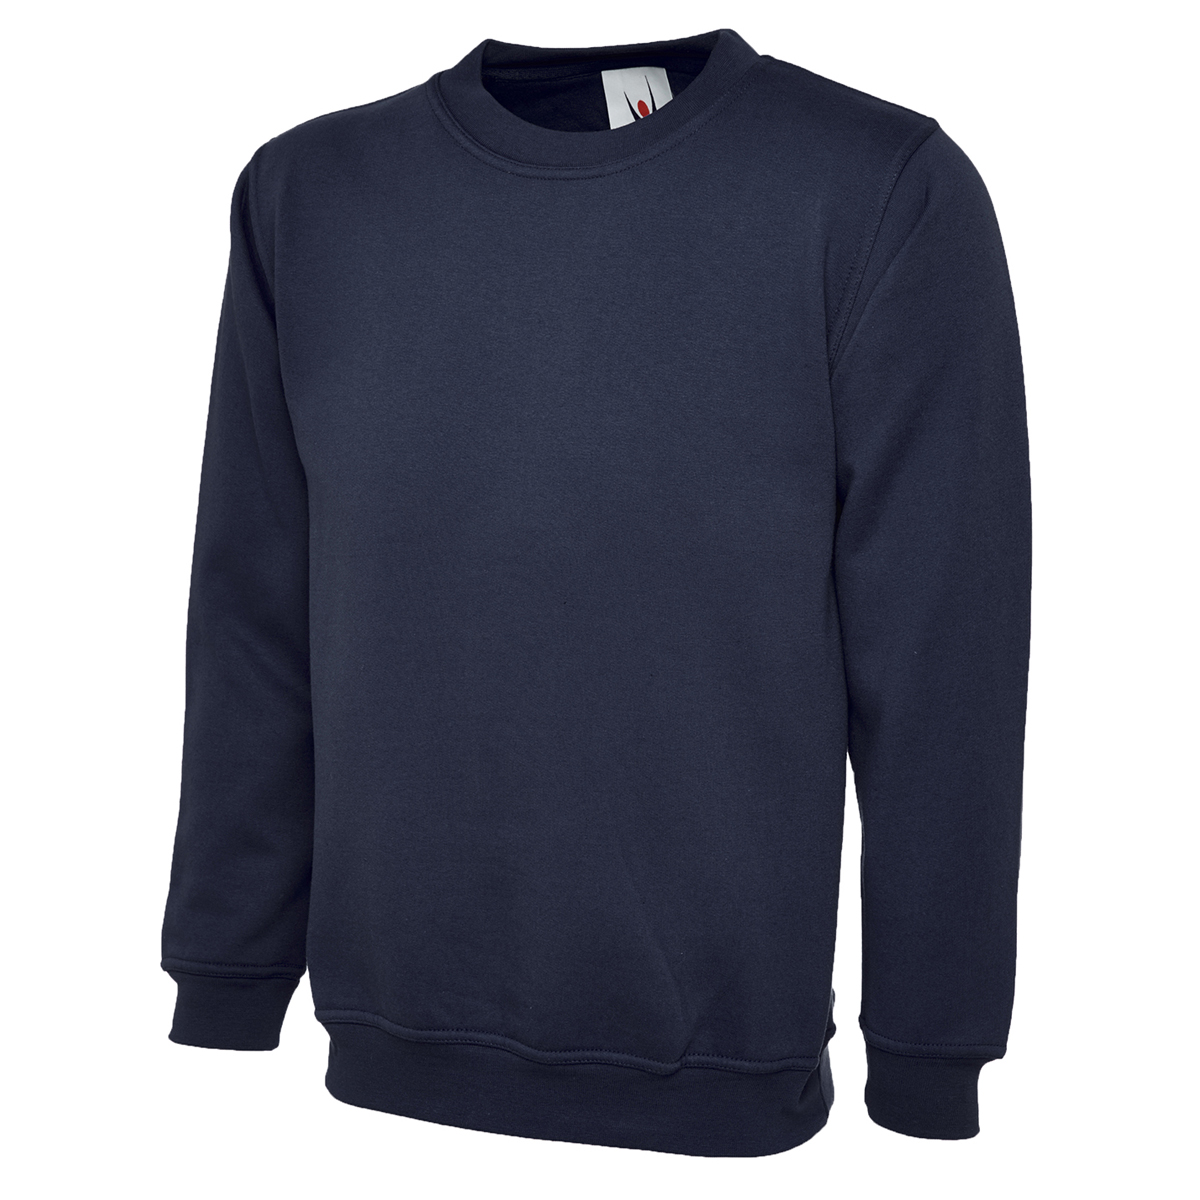 Uc203 300gsm classic sweatshirt - navy - xl